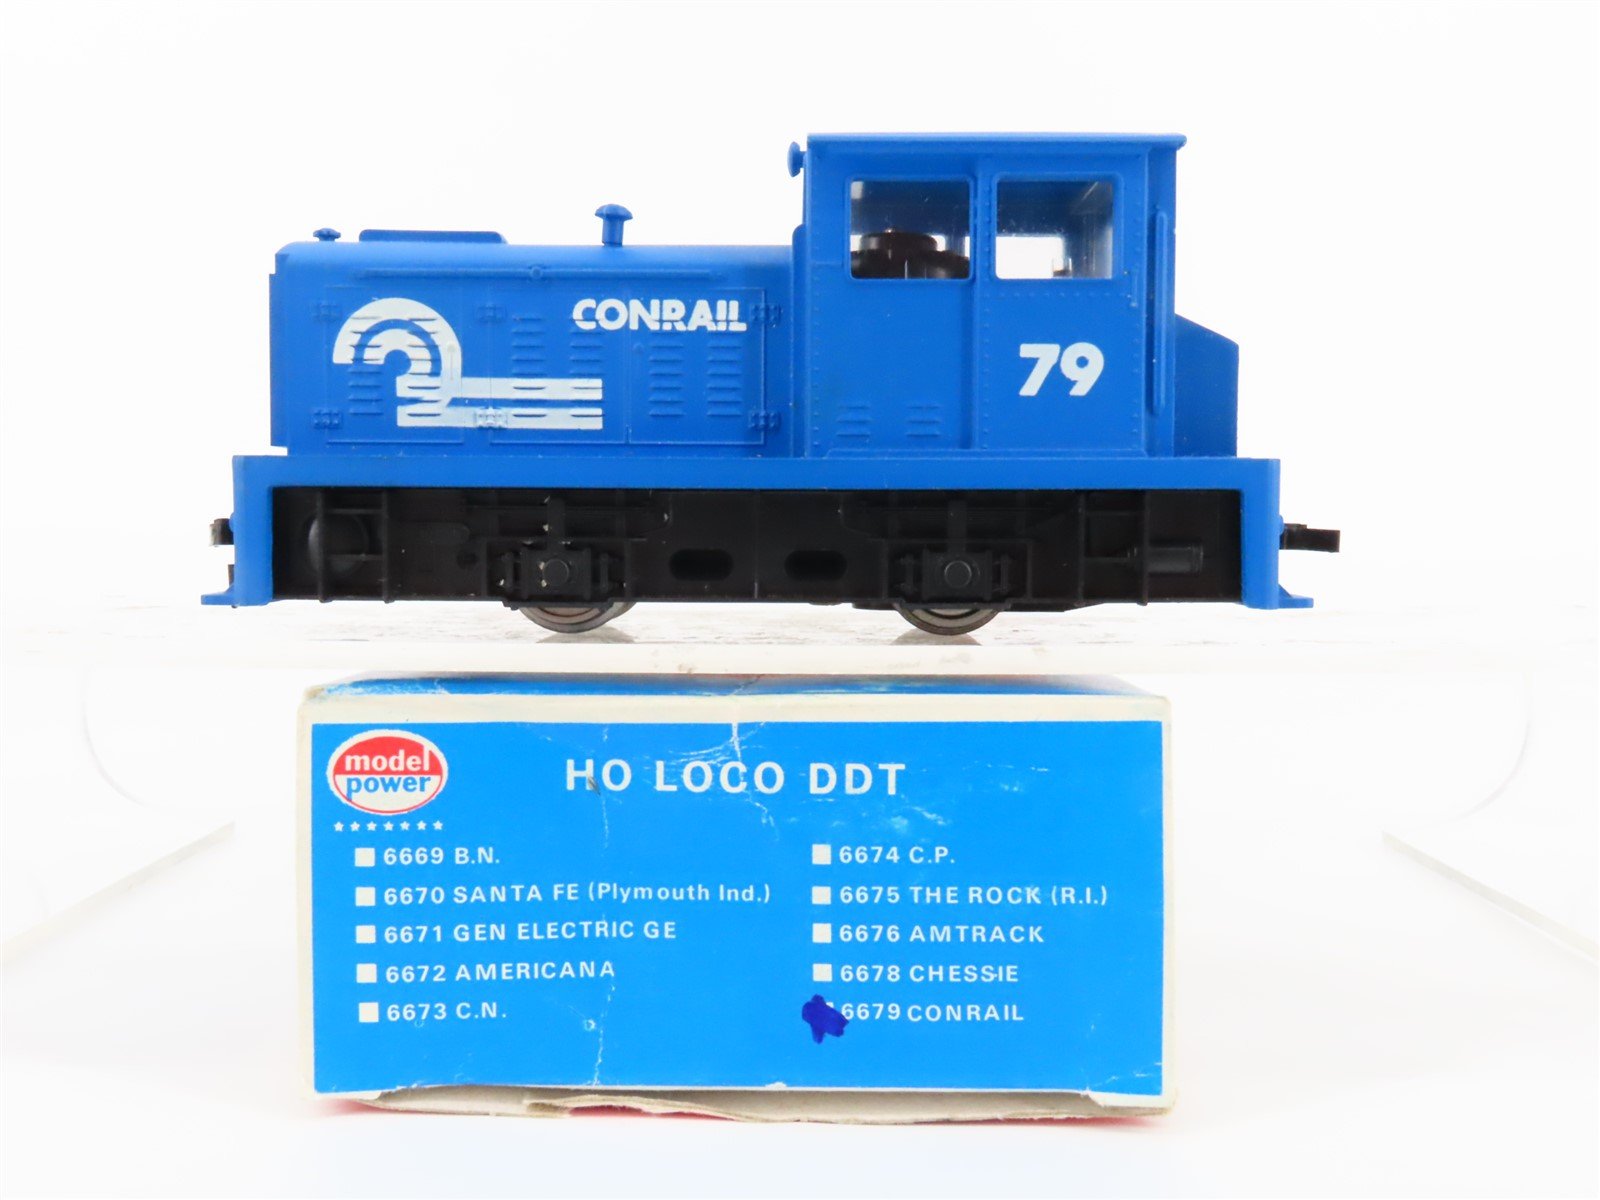 HO Scale Model Power 6679 CR Conrail DDT Diesel Locomotive #79